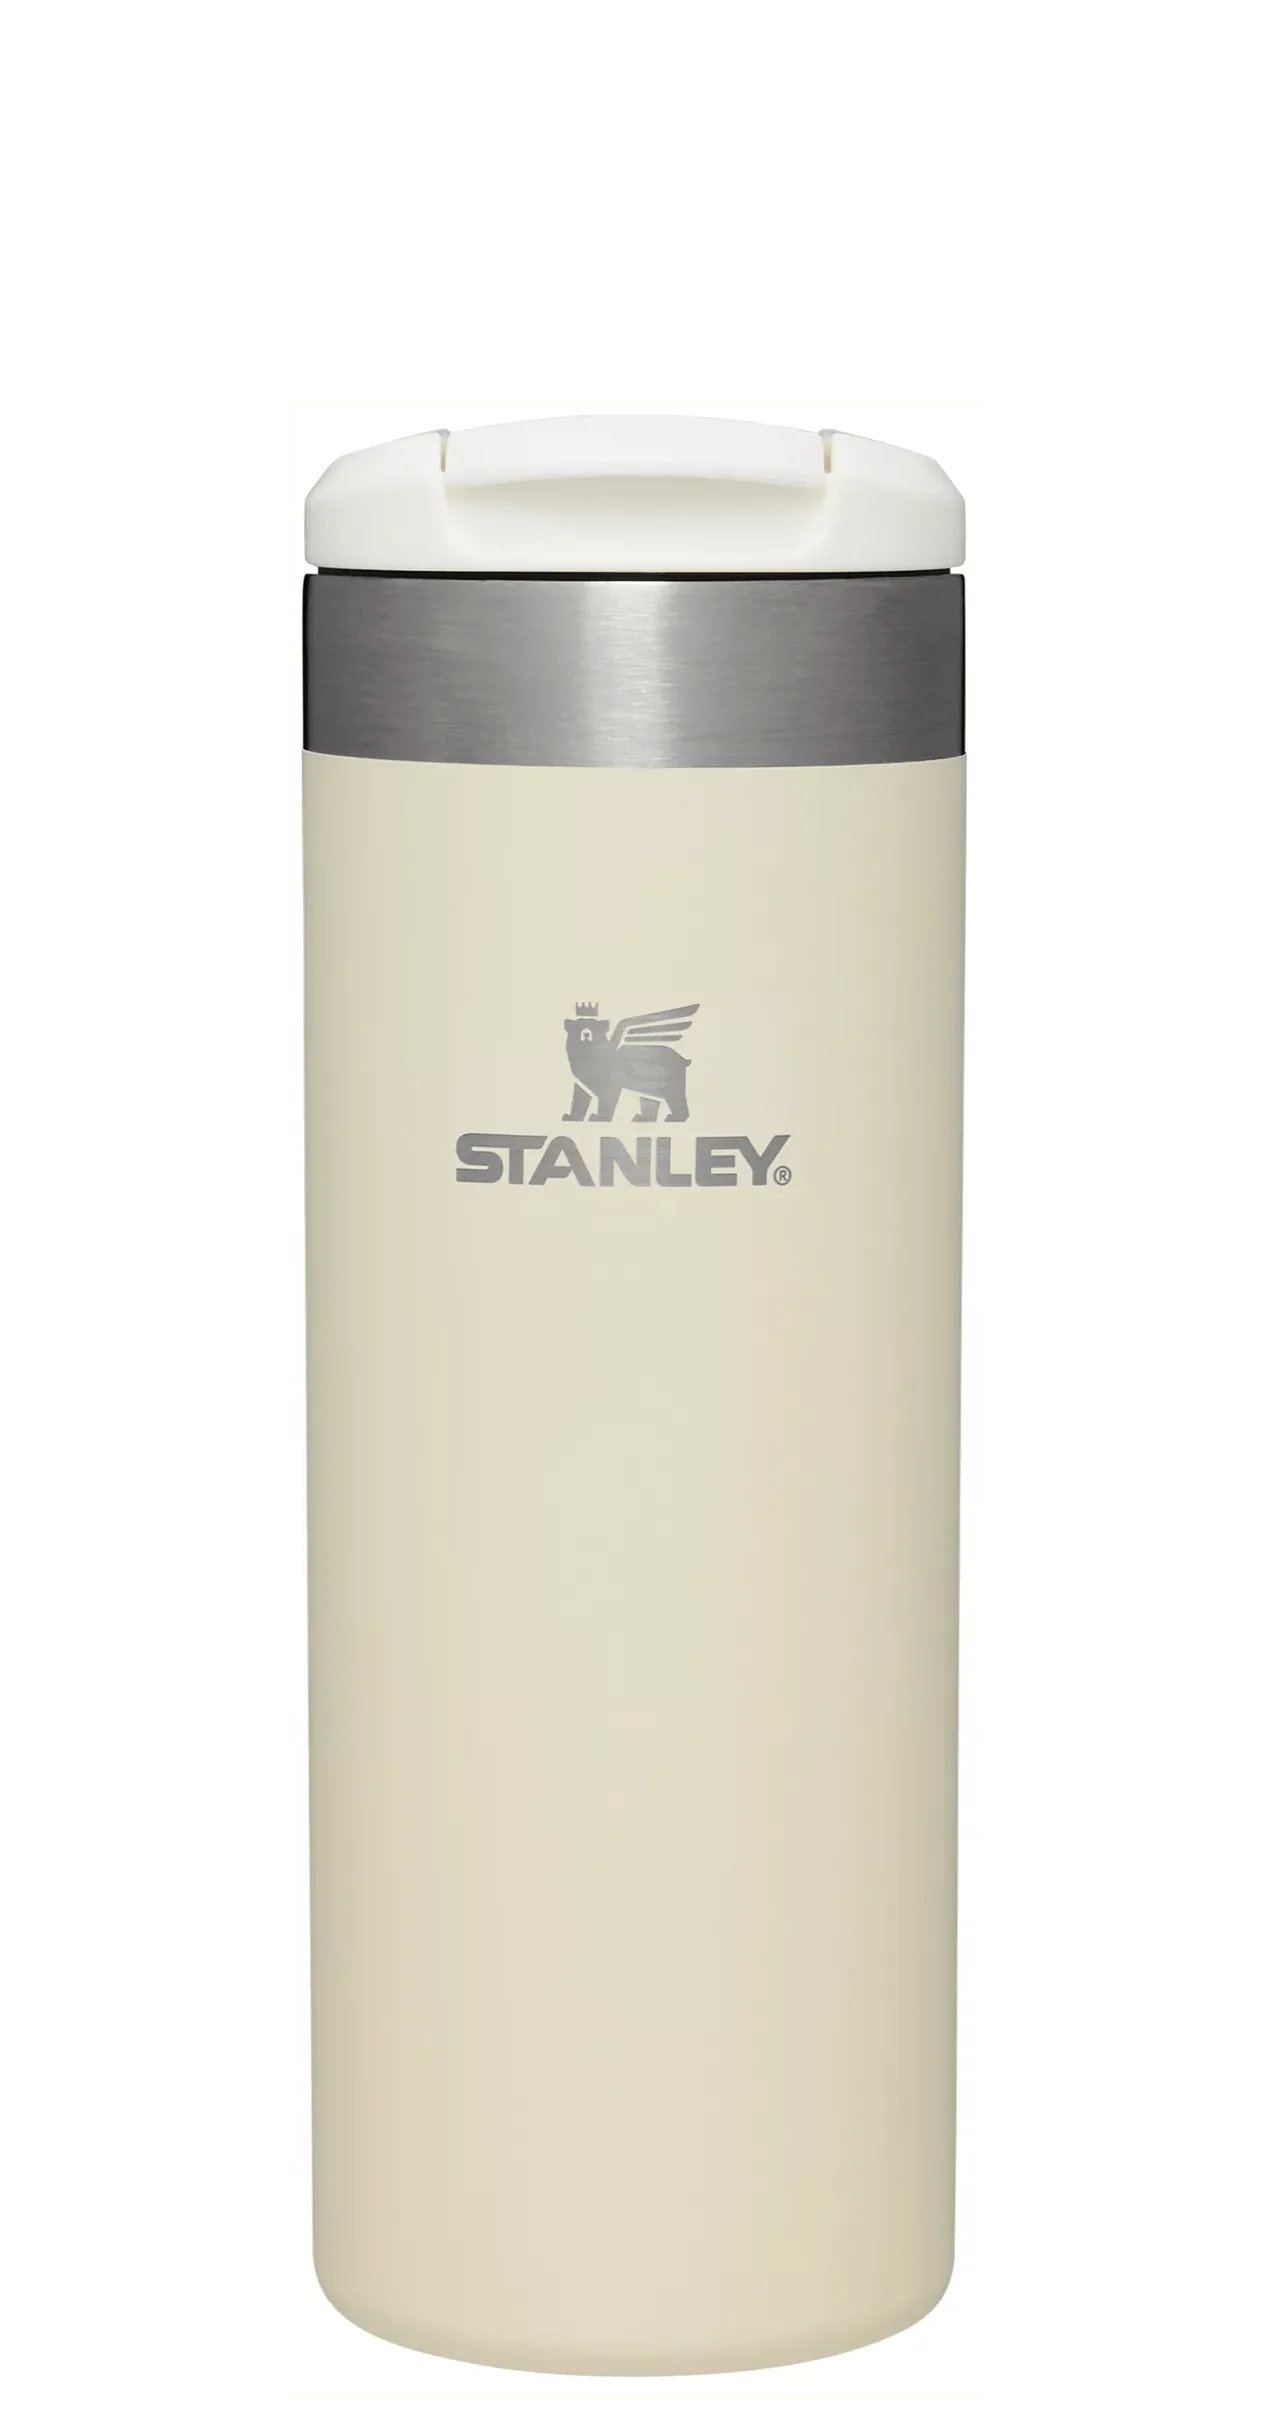 Stanley 20 oz. Aerolight Transit Bottle, Black Glimmer